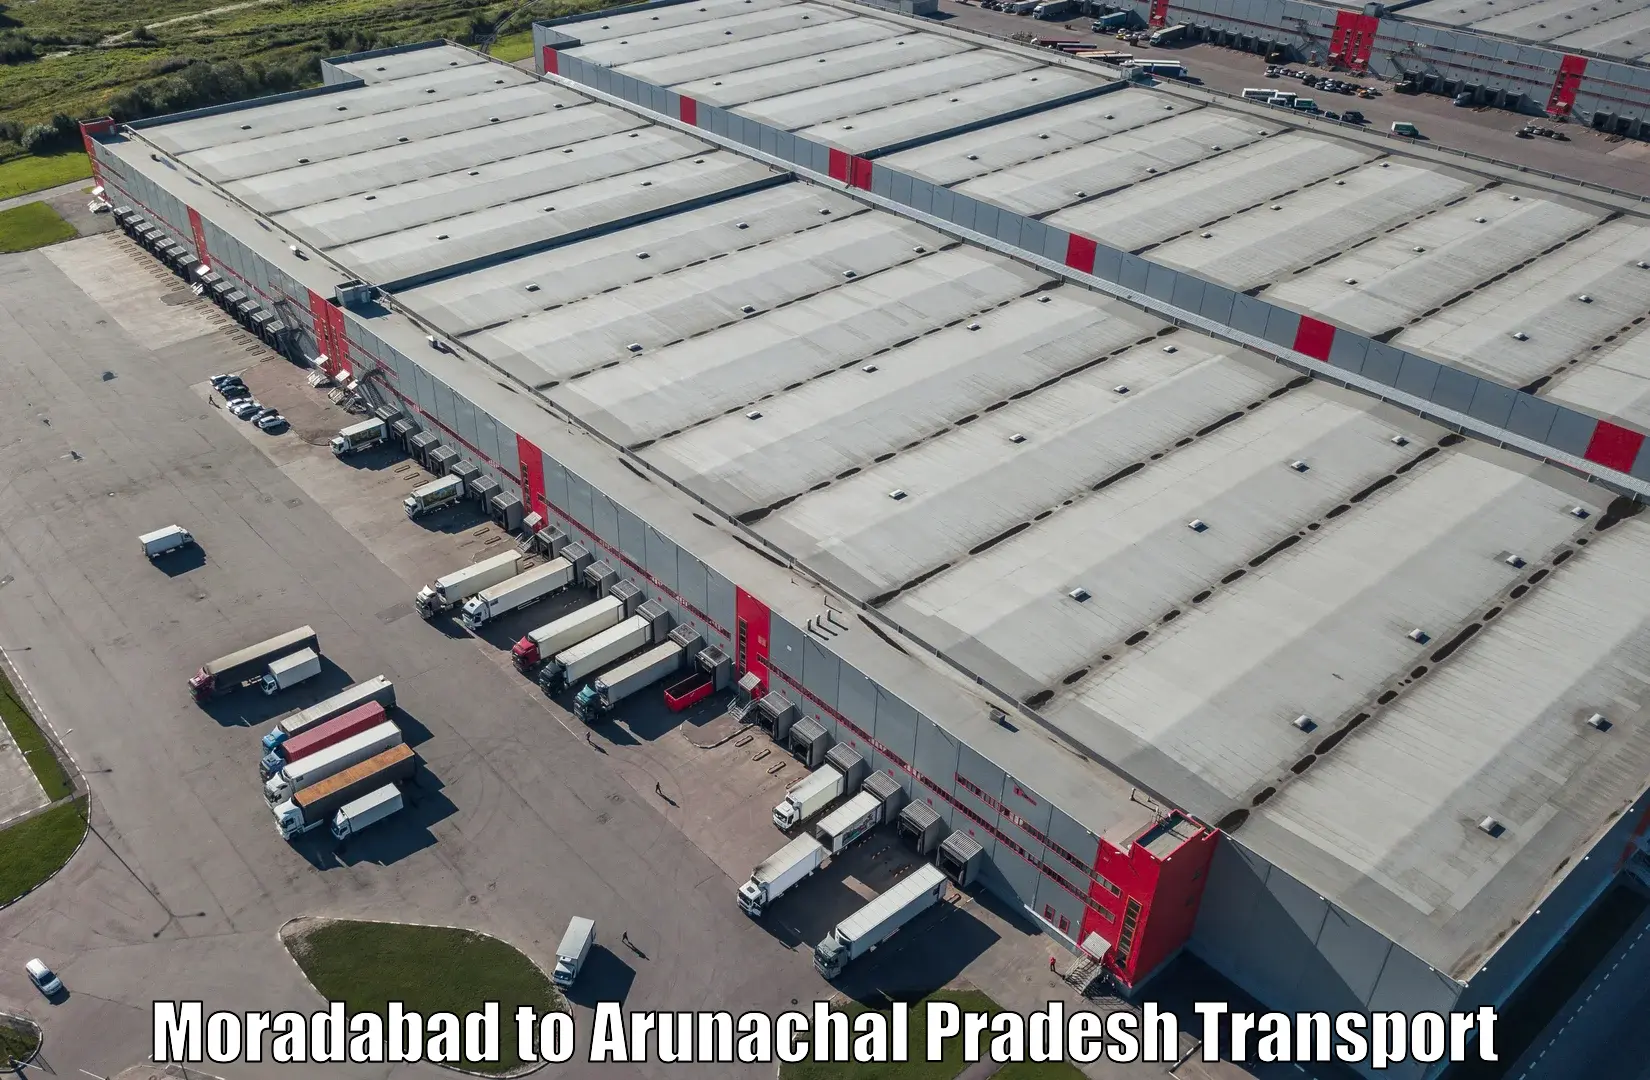 Truck transport companies in India Moradabad to Arunachal Pradesh